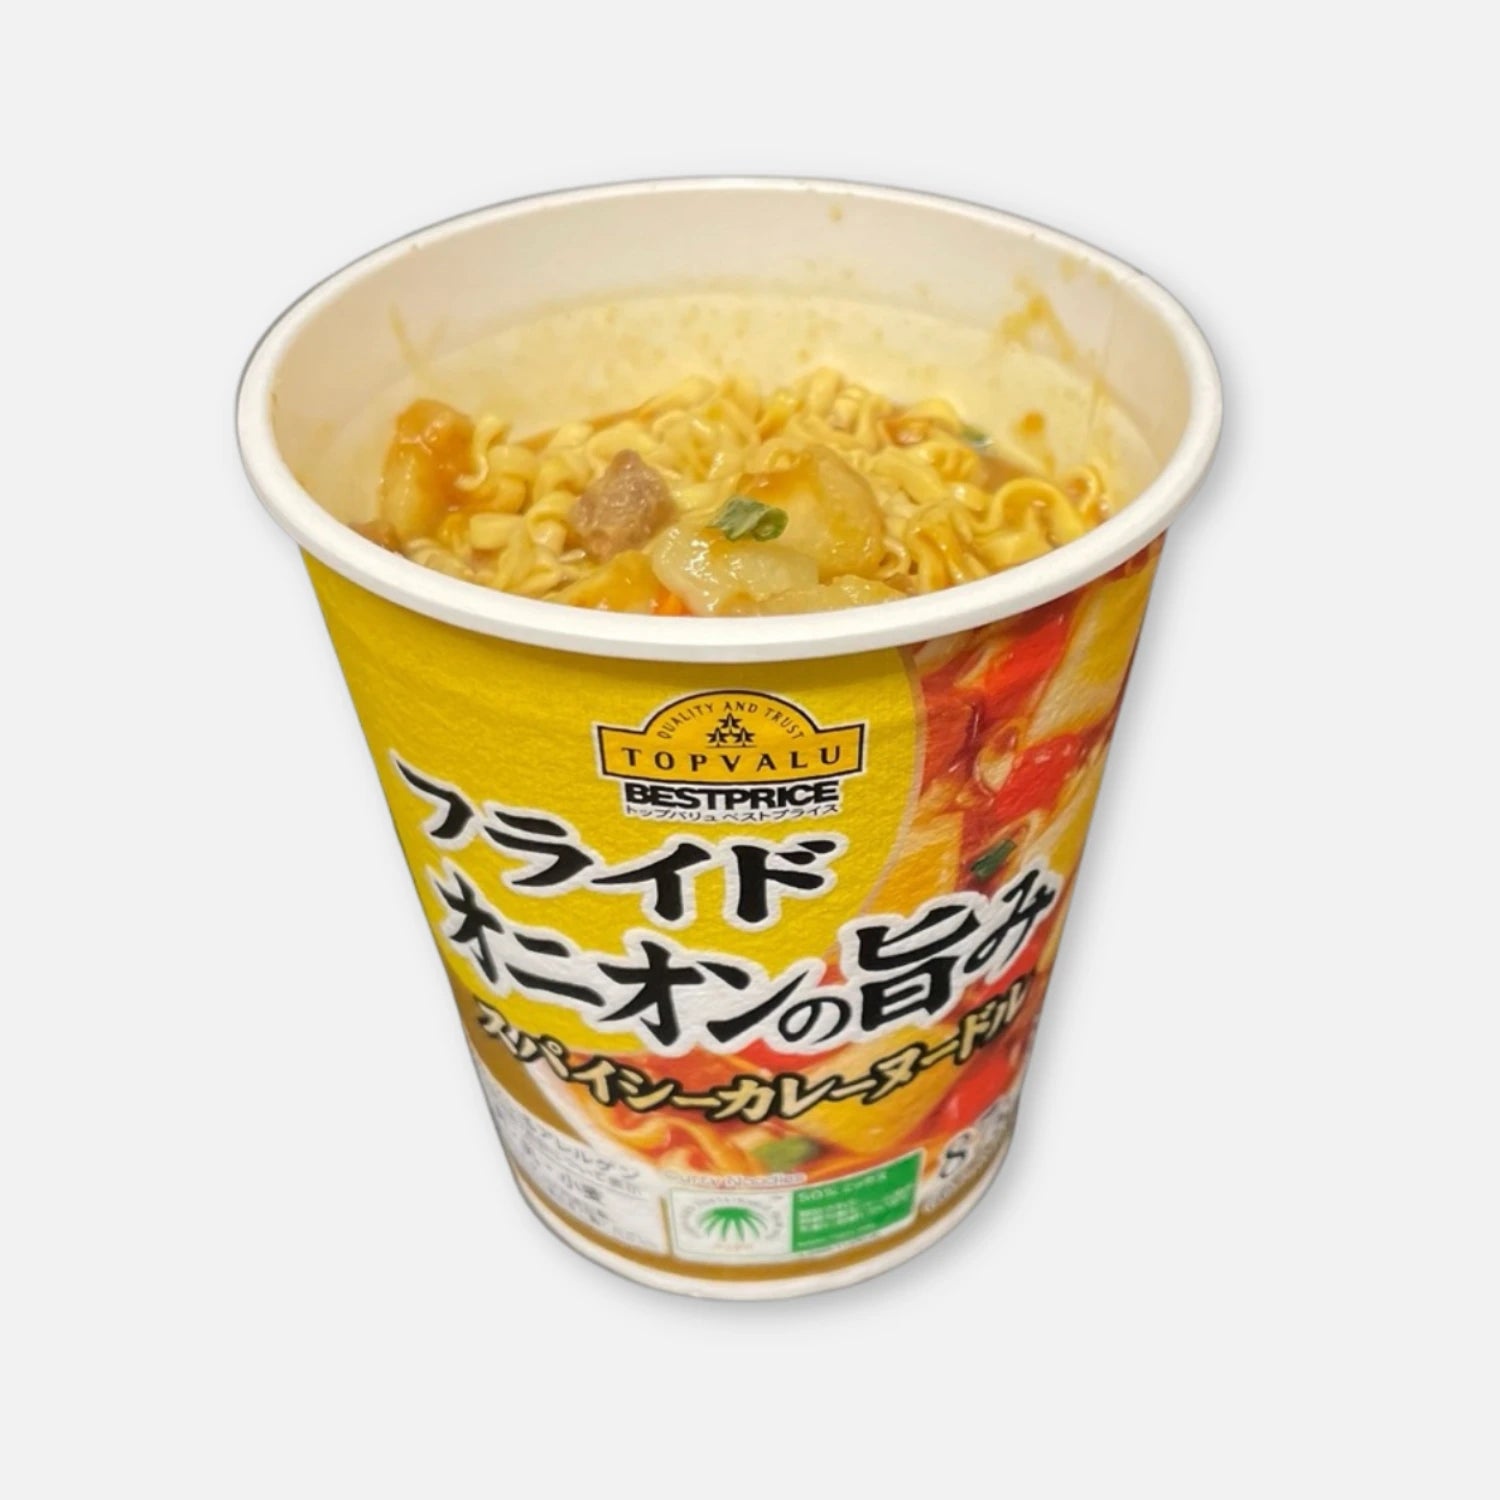 Topvalu Curry Instant Noodle 87g - Buy Me Japan